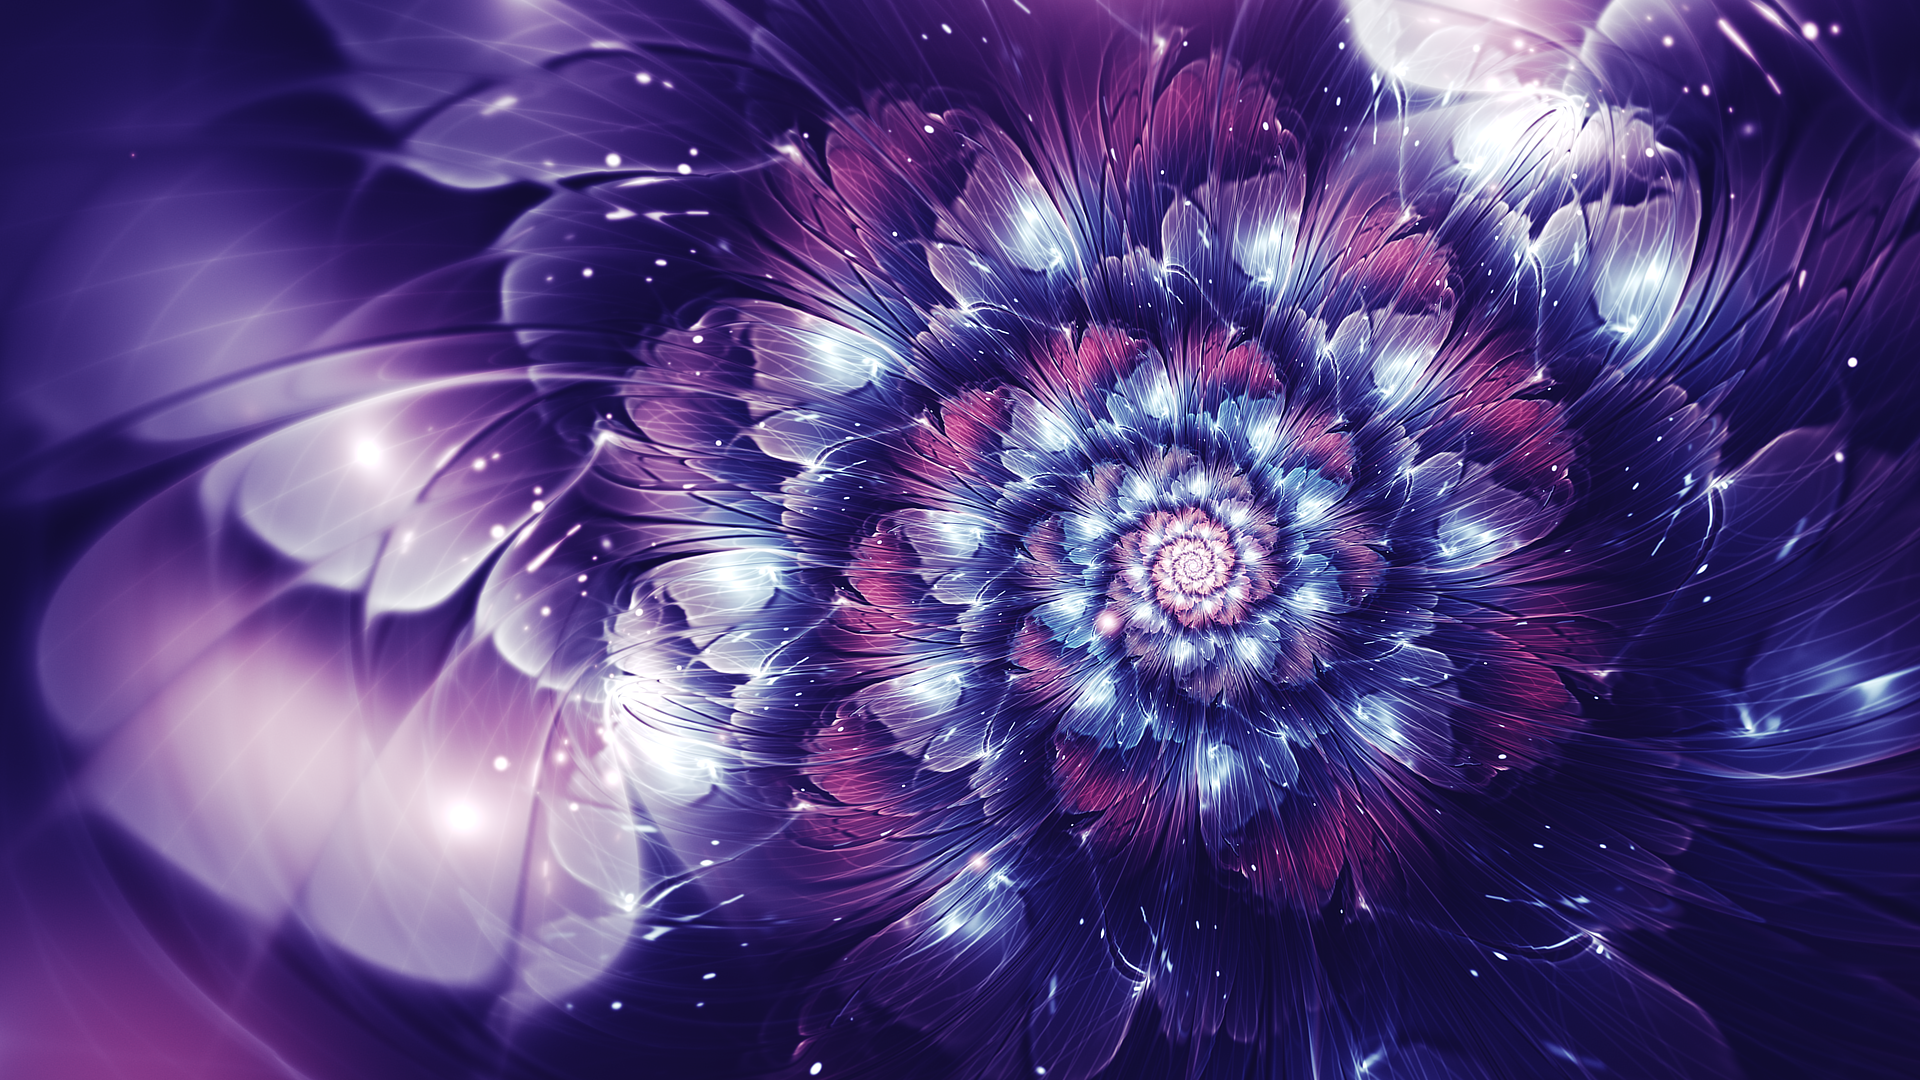 Abstract Fractal Fractal Flowers Glowing Digital Art Violet 1920x1080